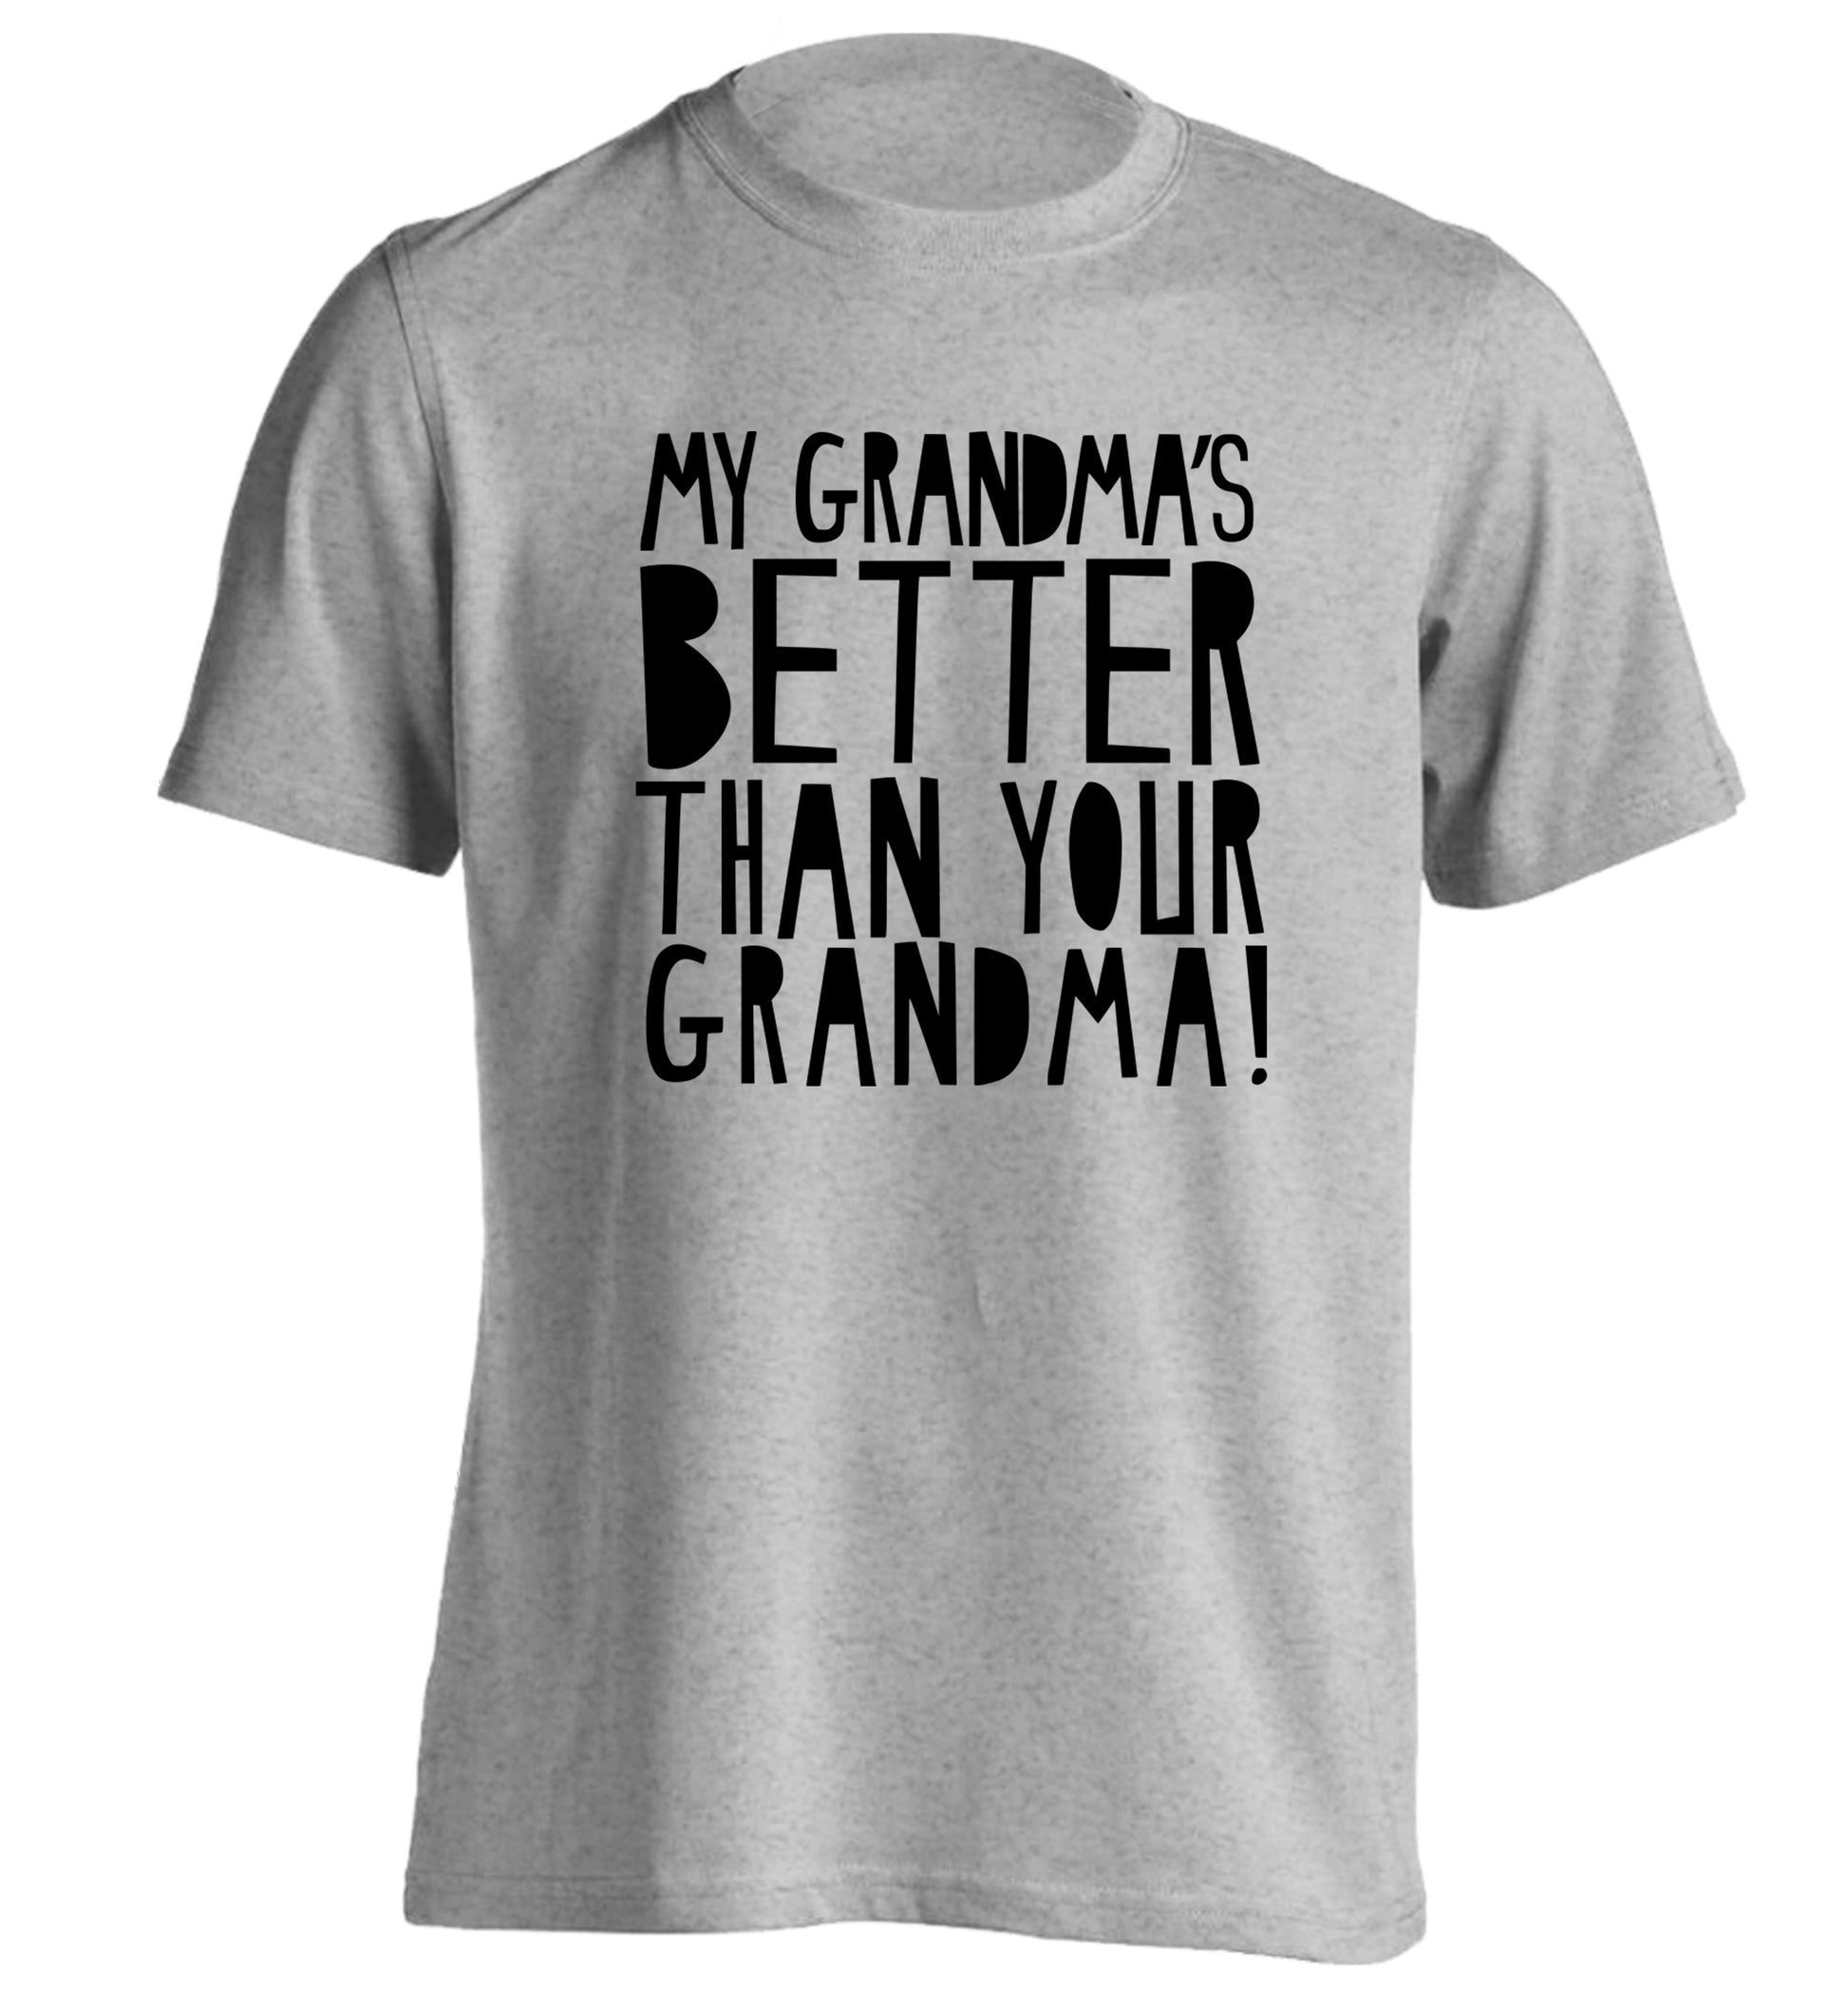 My grandma's better than your grandma adults unisex grey Tshirt 2XL